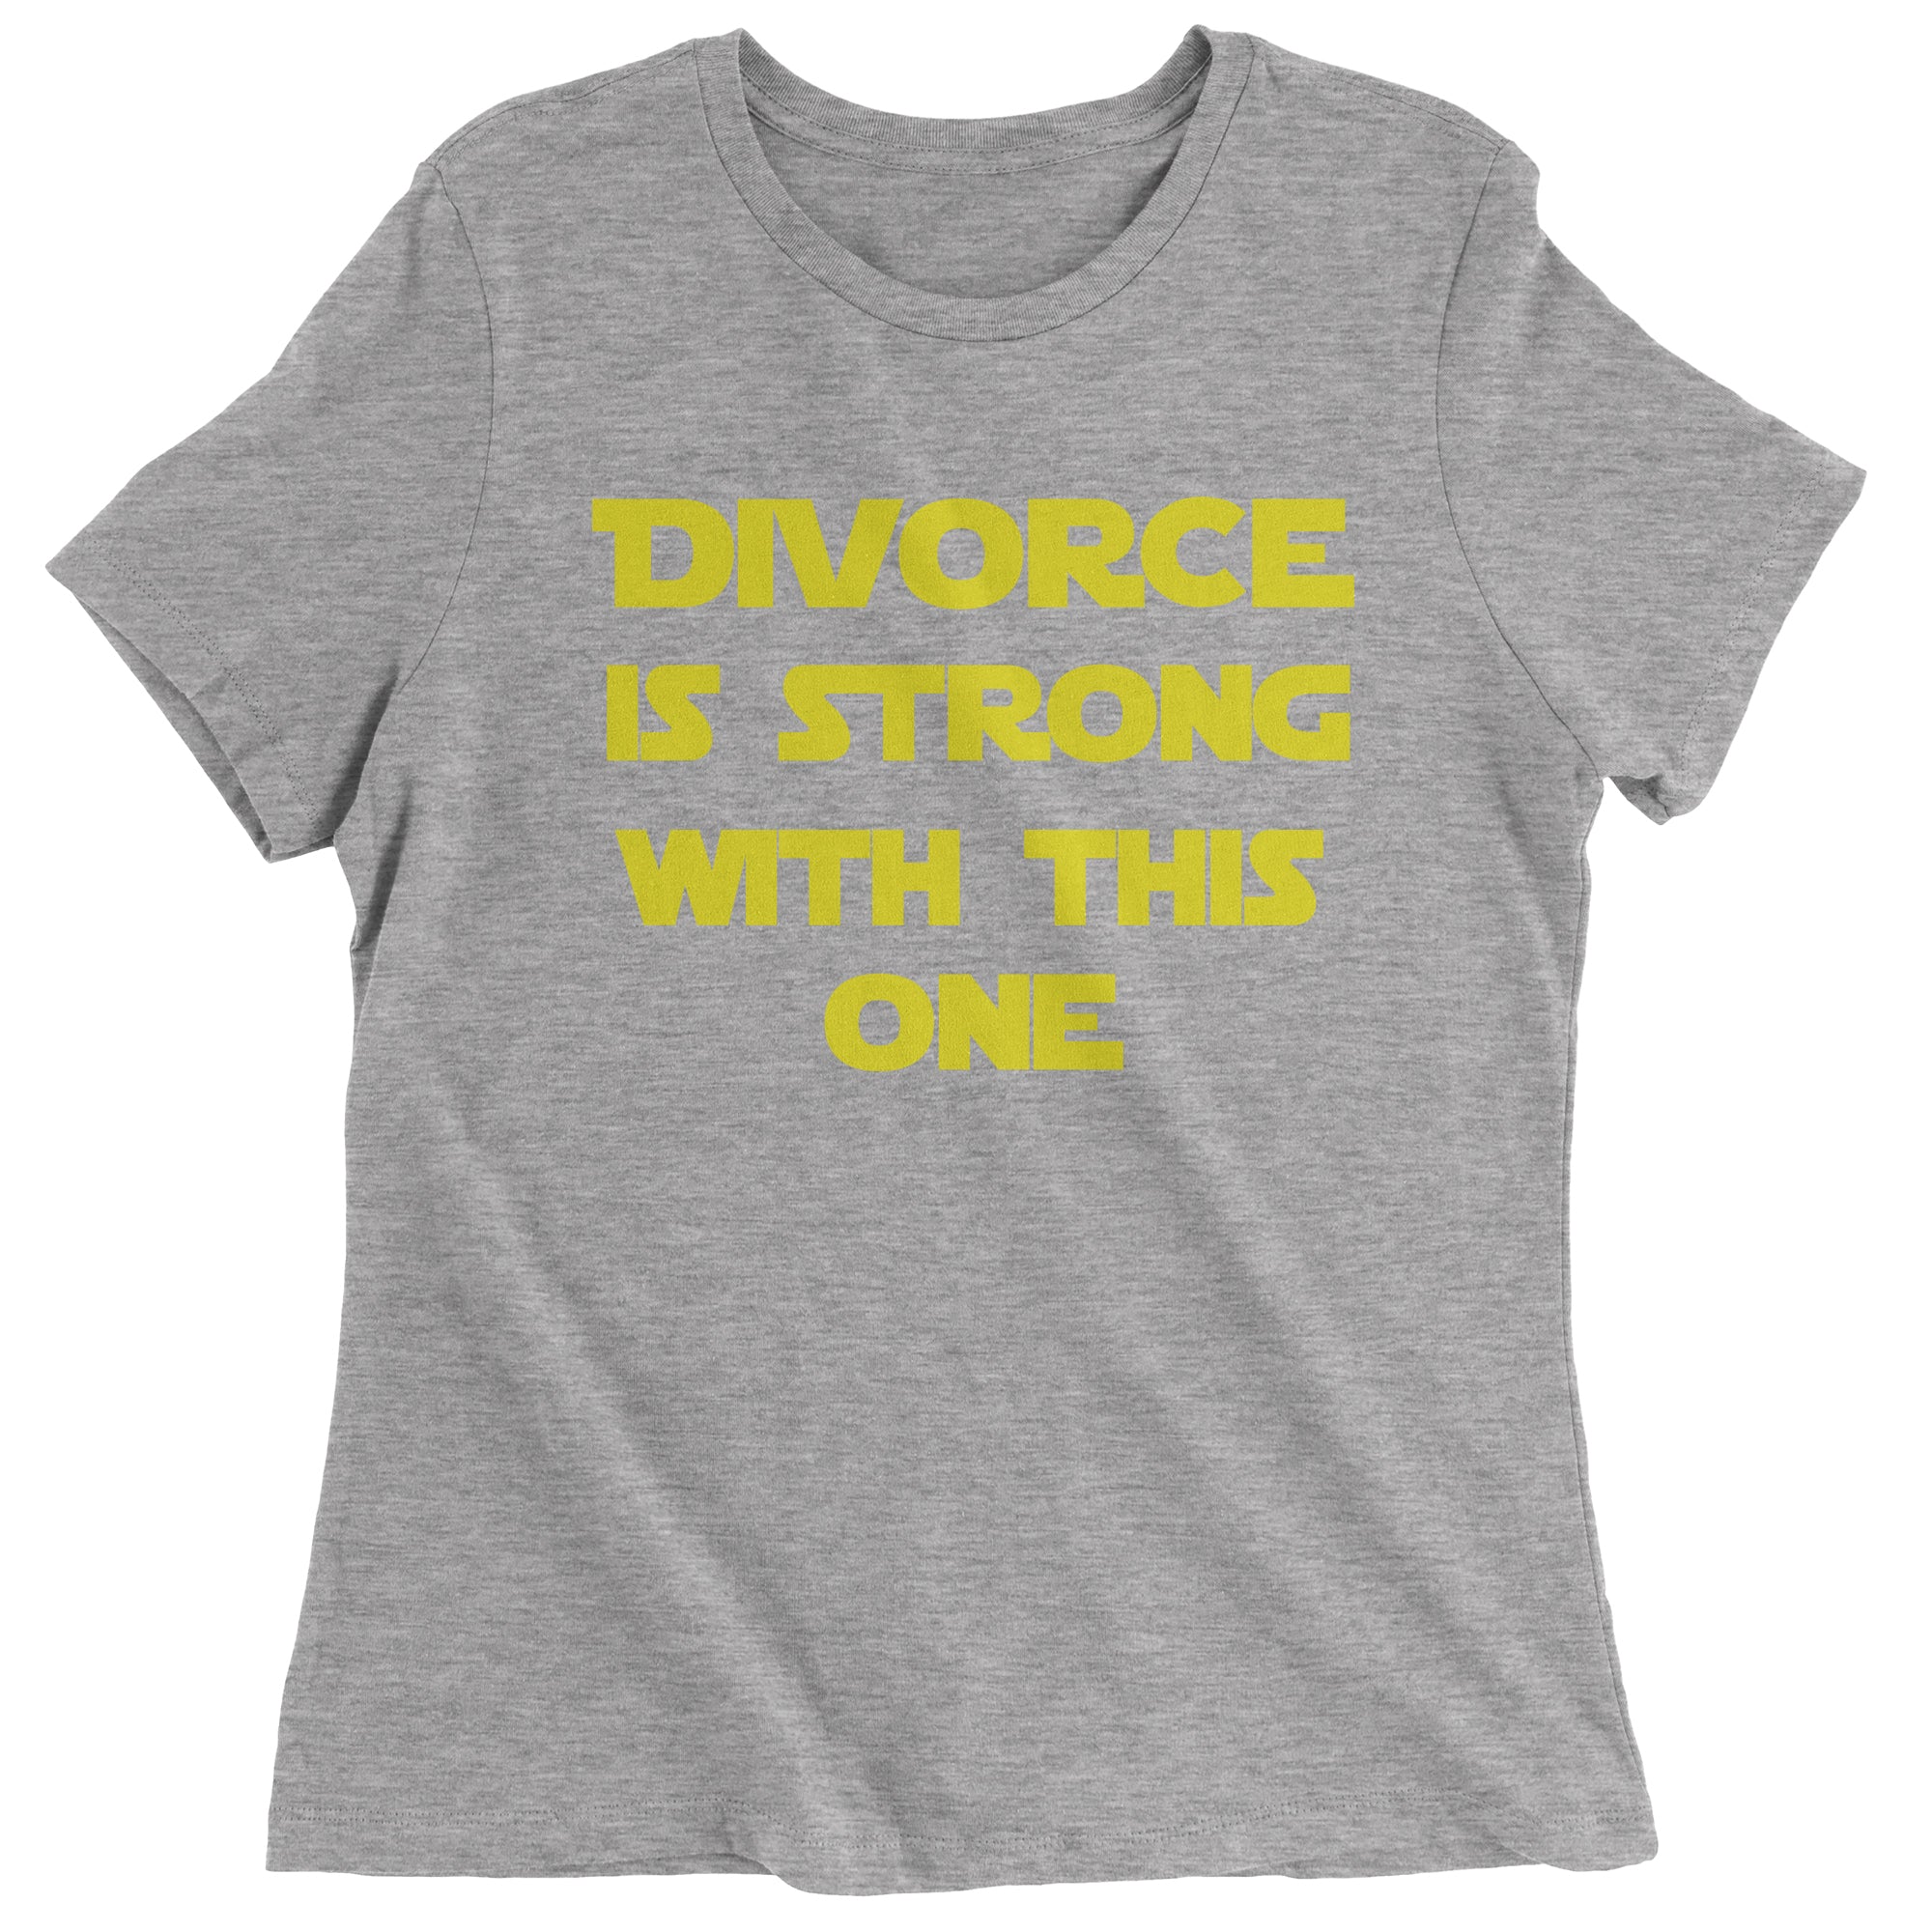 Divorce Funny Parody Force Wars Women's T-Shirt